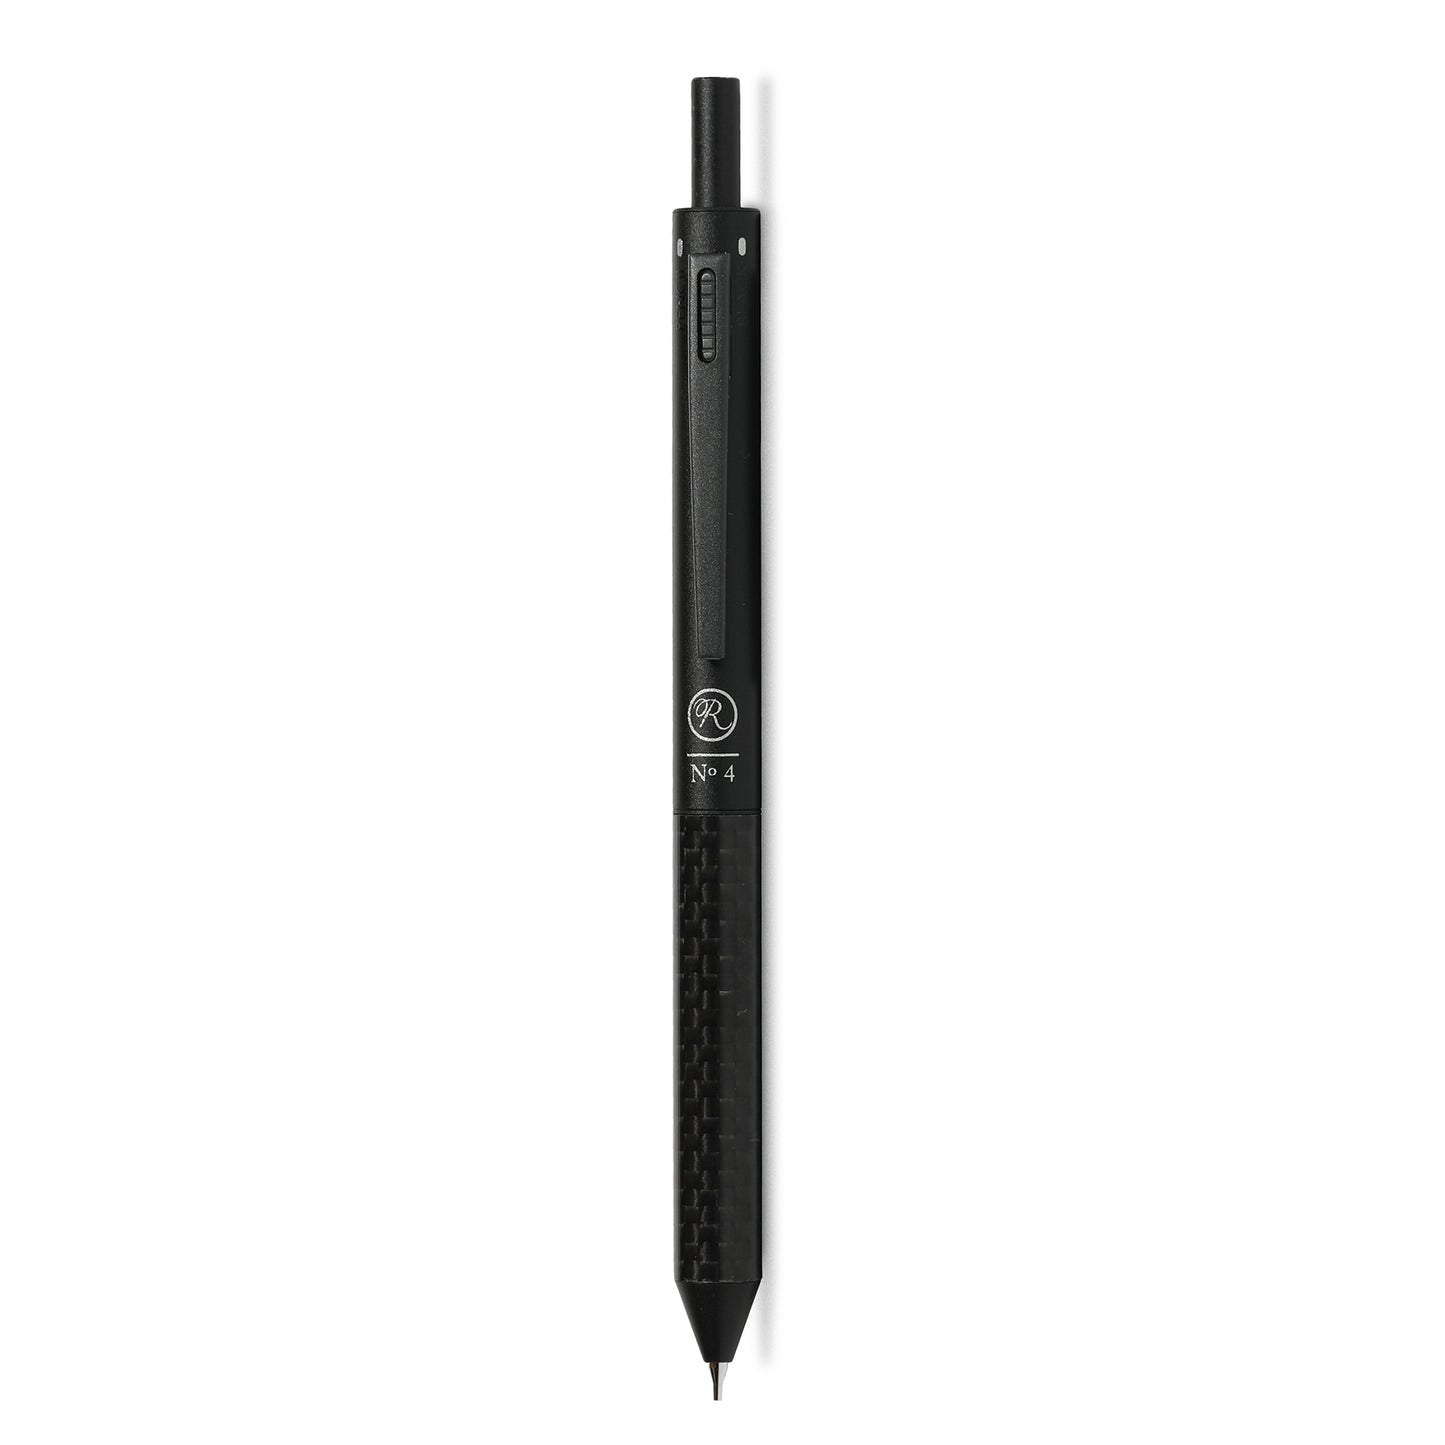 Itoya Pen Romeo Multi Functional Pen 4 in 1 carbon W tip